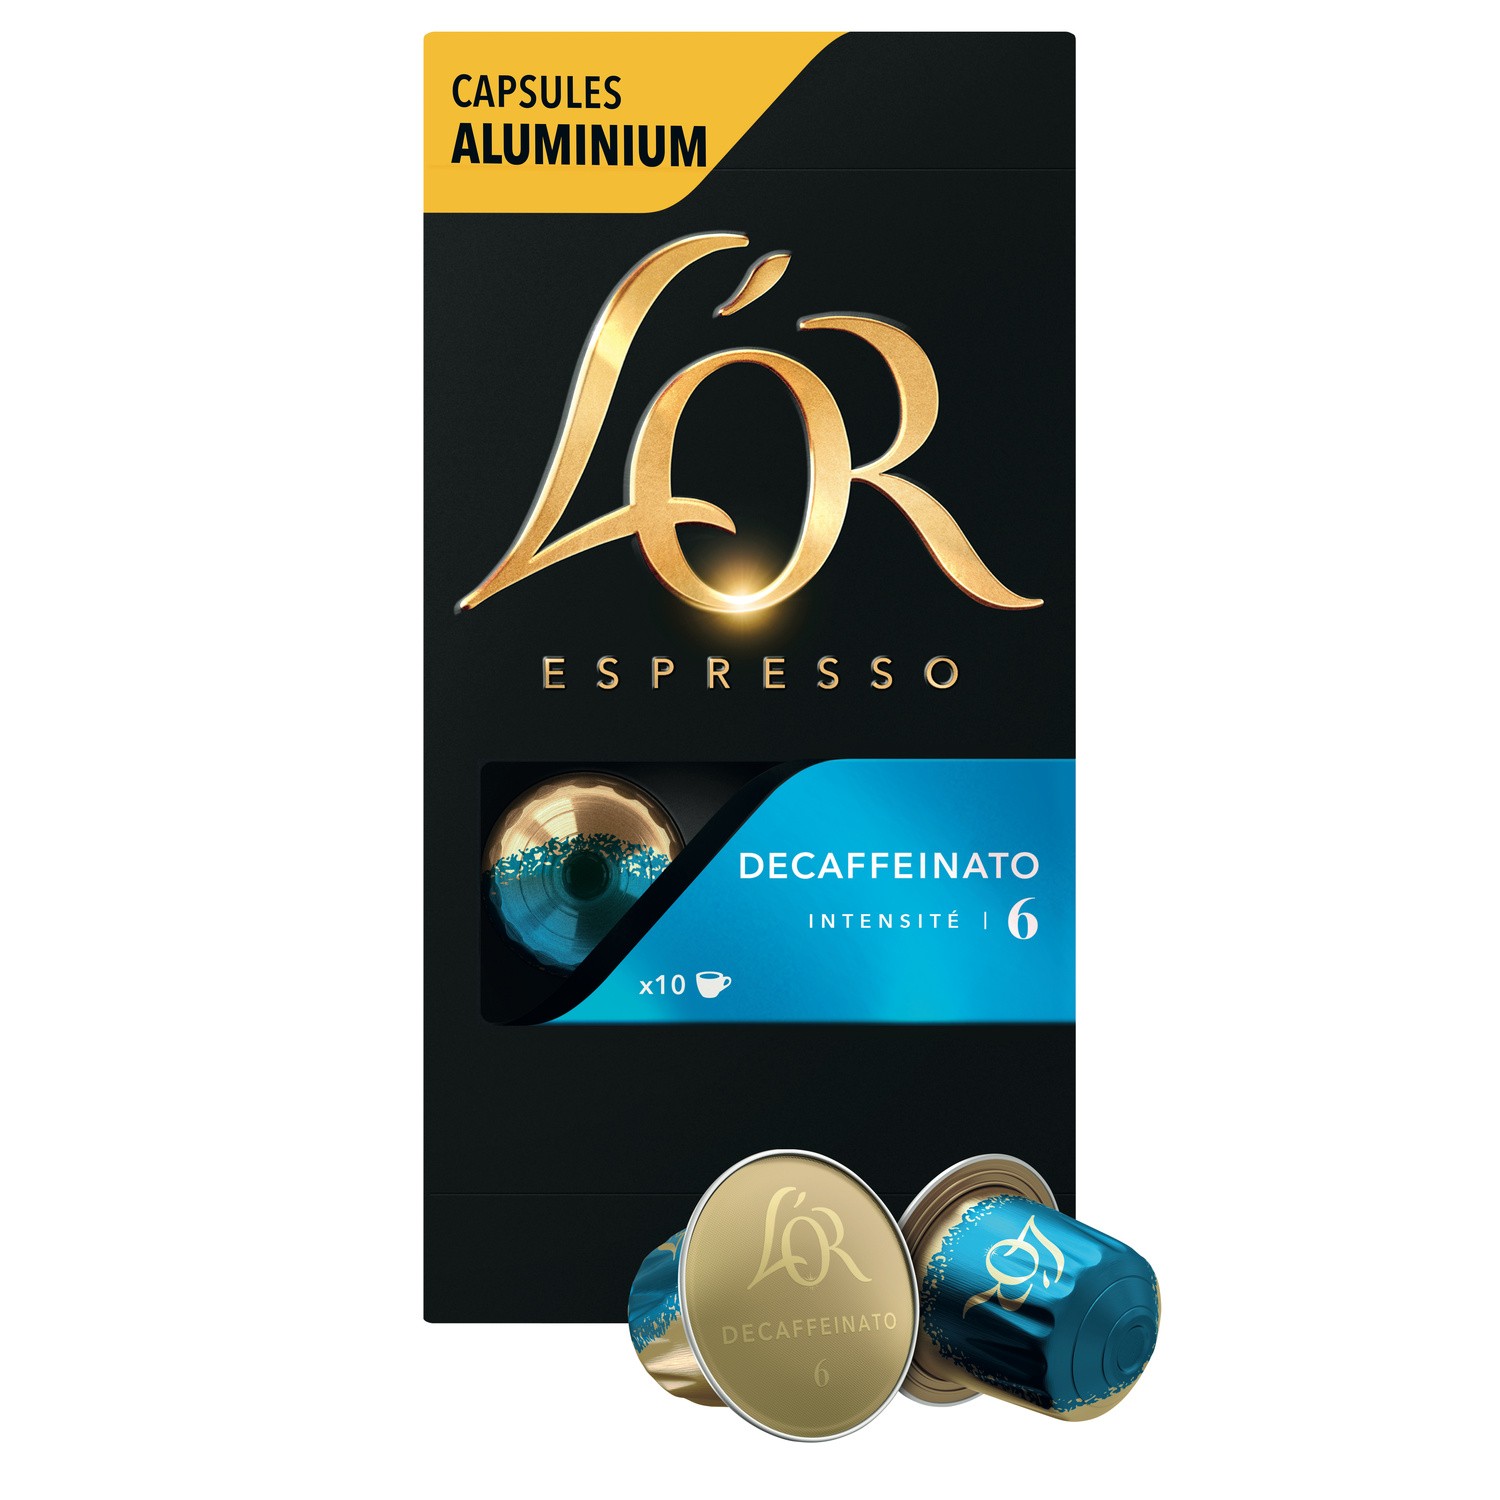 10 capsules de café L'Or Espresso Decaffeinato intensité 6